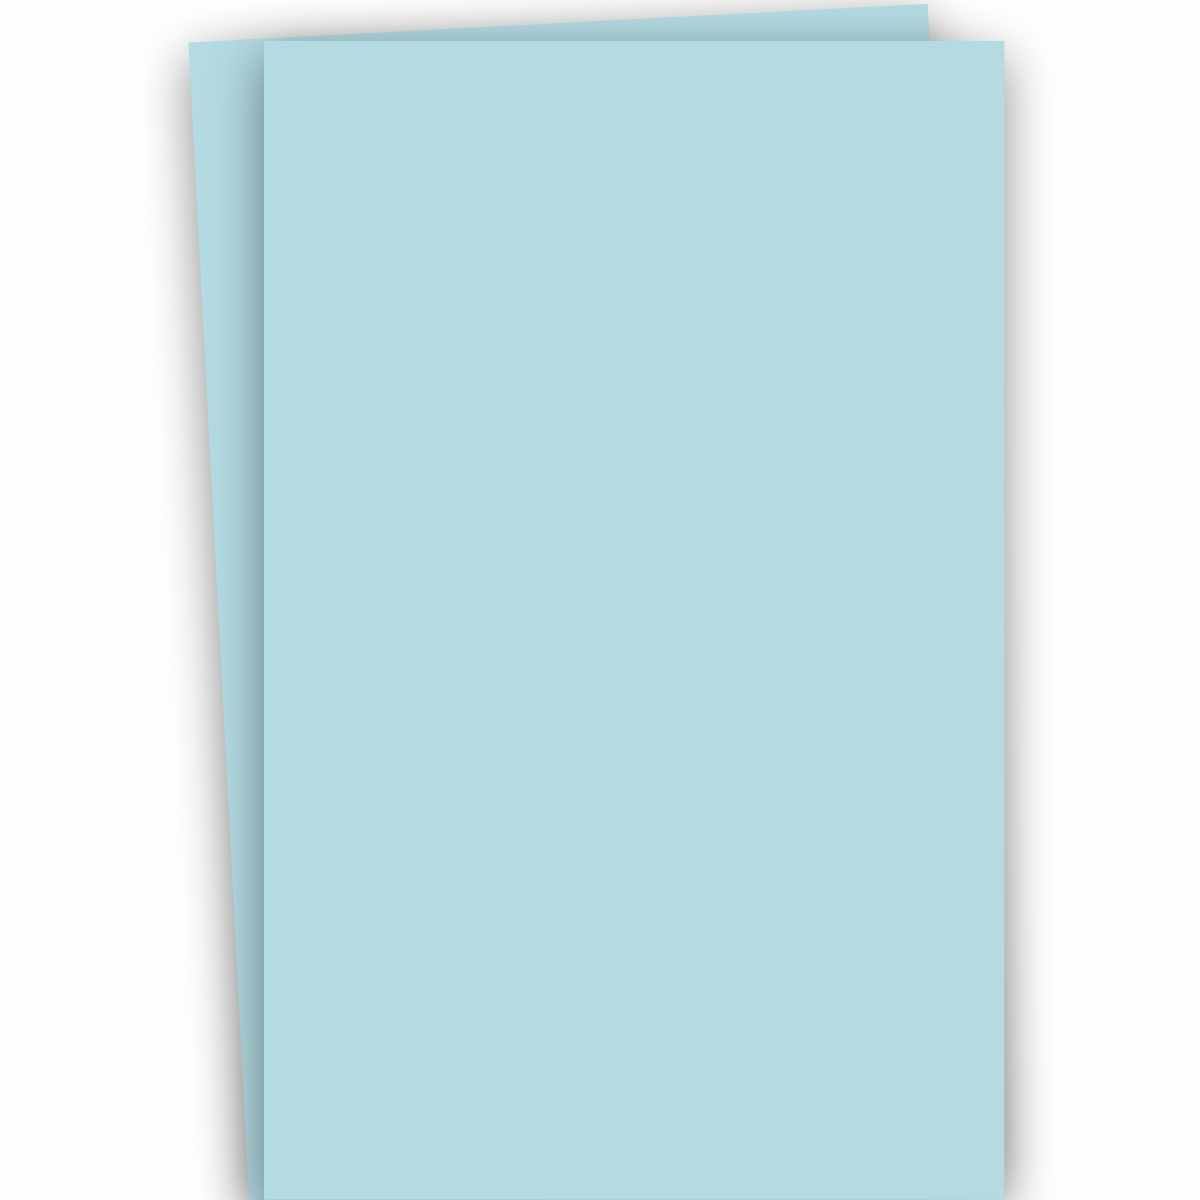 Burano LILAC (06) - 11X17 Lightweight Cardstock Paper - 52lb